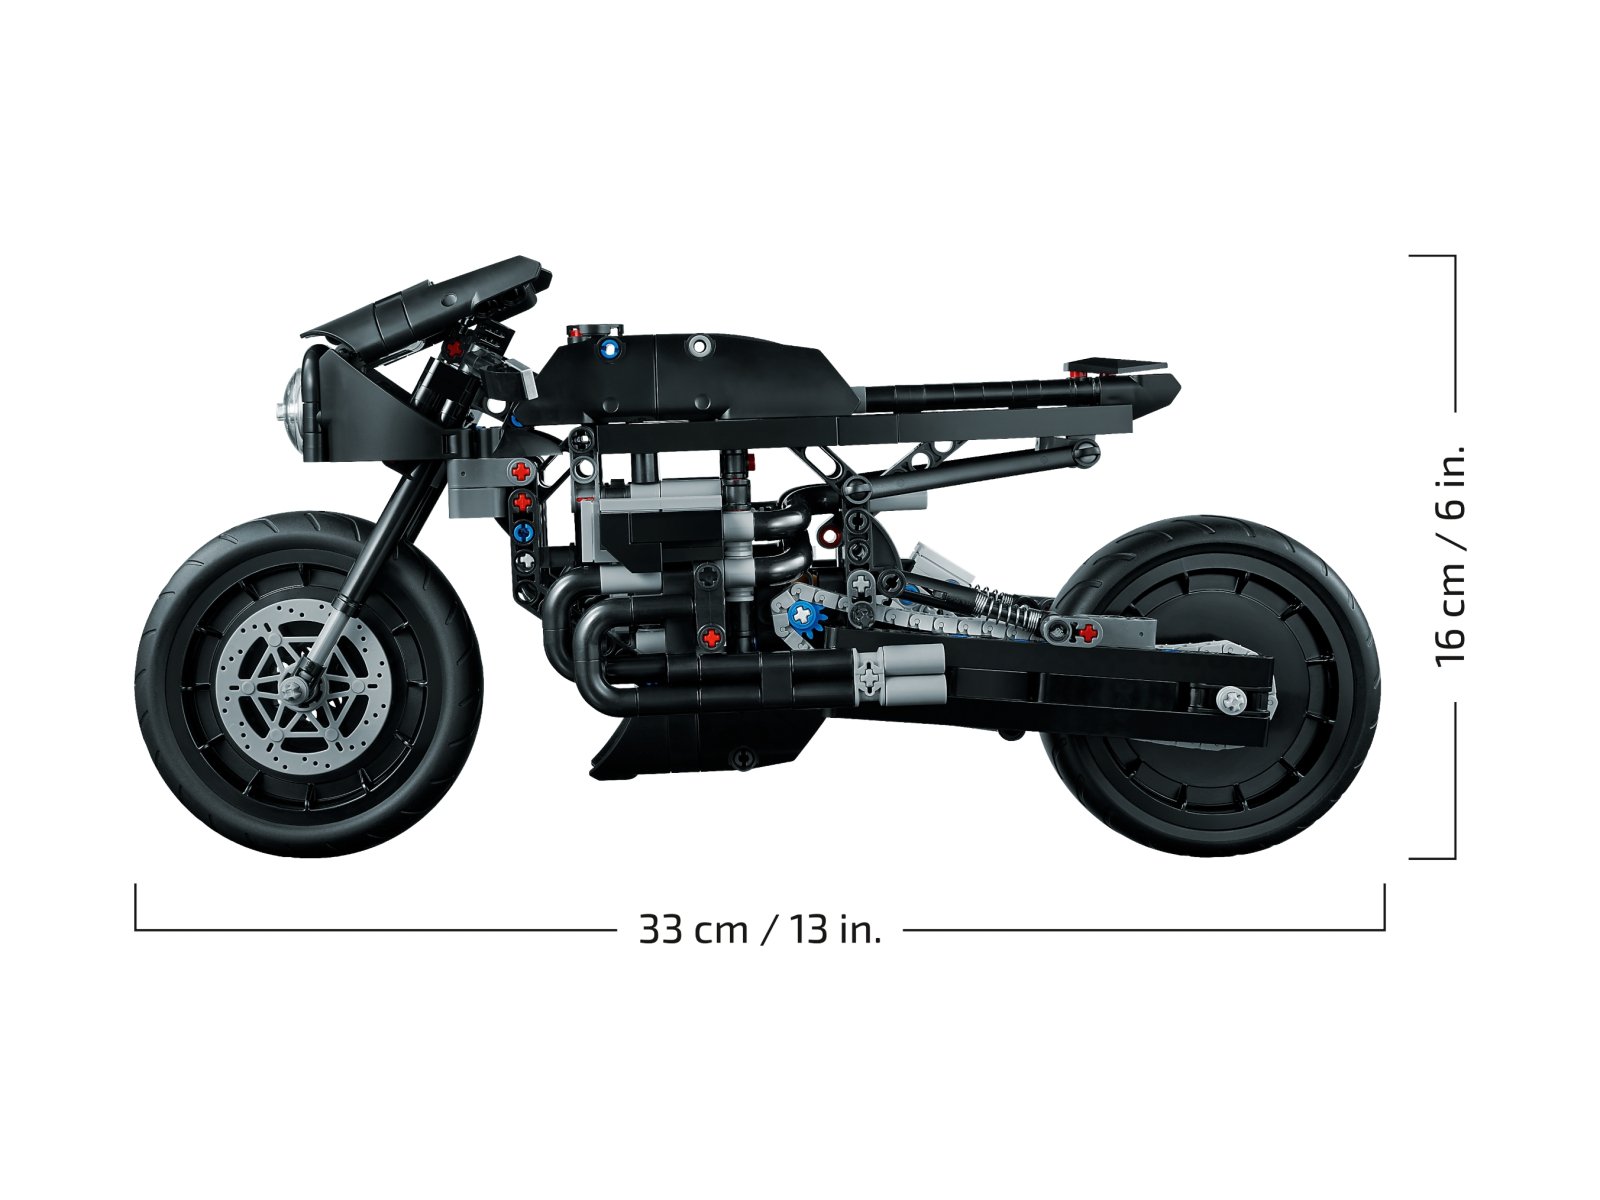 LEGO Technic BATMAN — BATMOTOR™ 42155